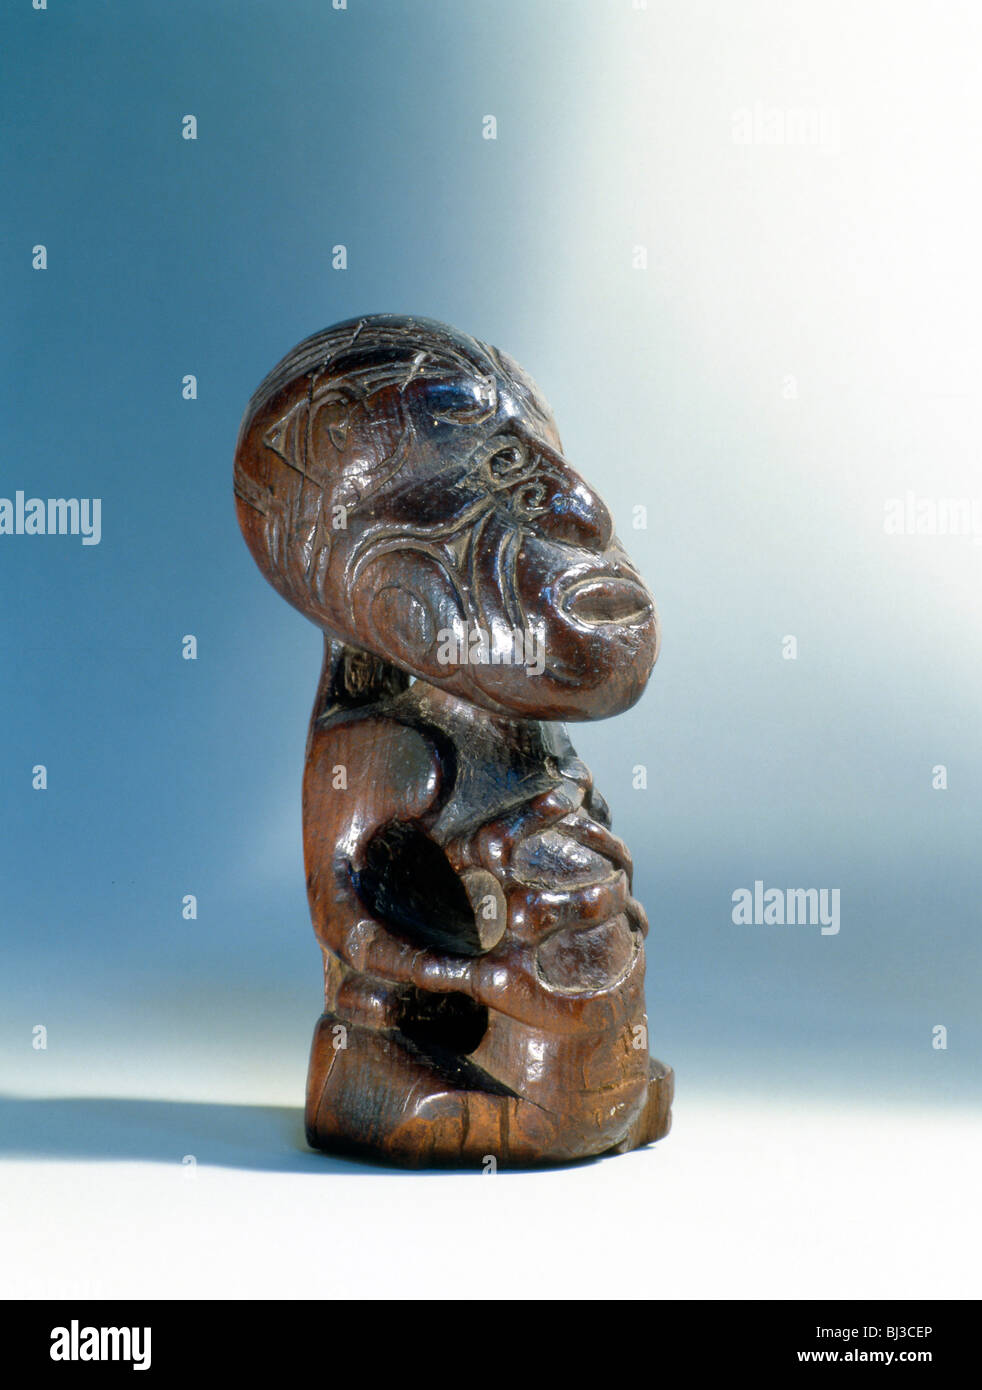 Small wooden seated Maori figure, New Zealand. Artist: Werner Forman Stock Photo